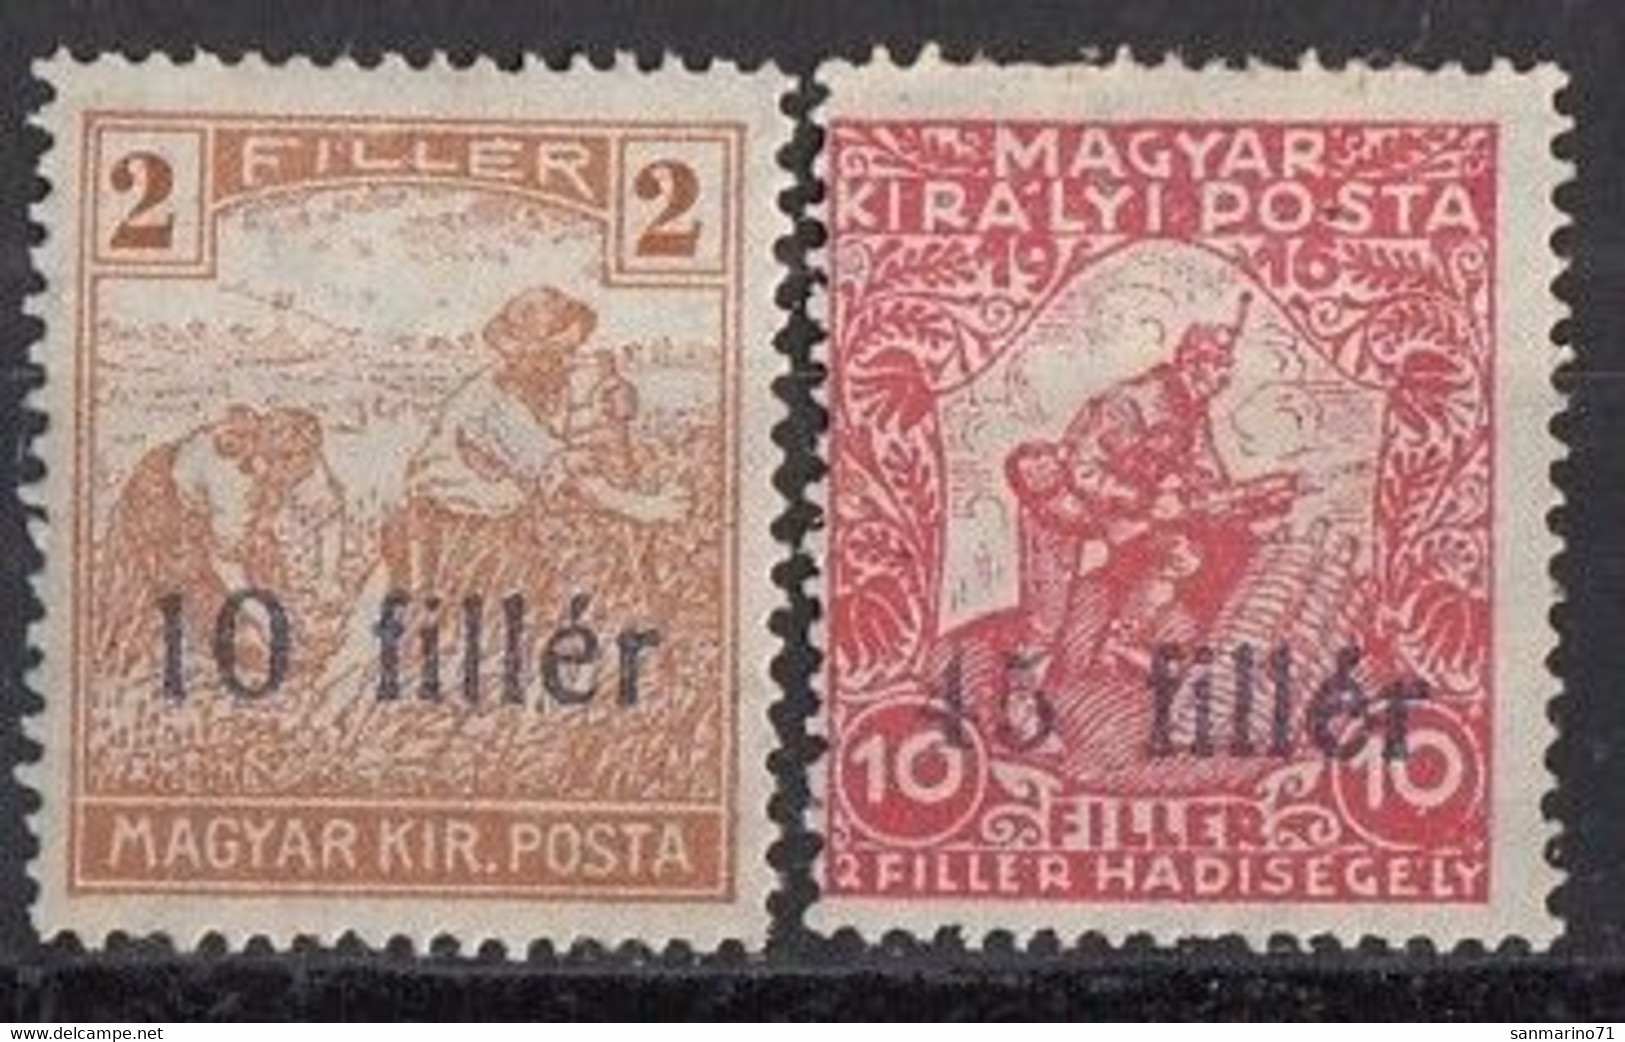 HUNGARY Temisvar 1-2,unused,falc Hinged - Local Post Stamps